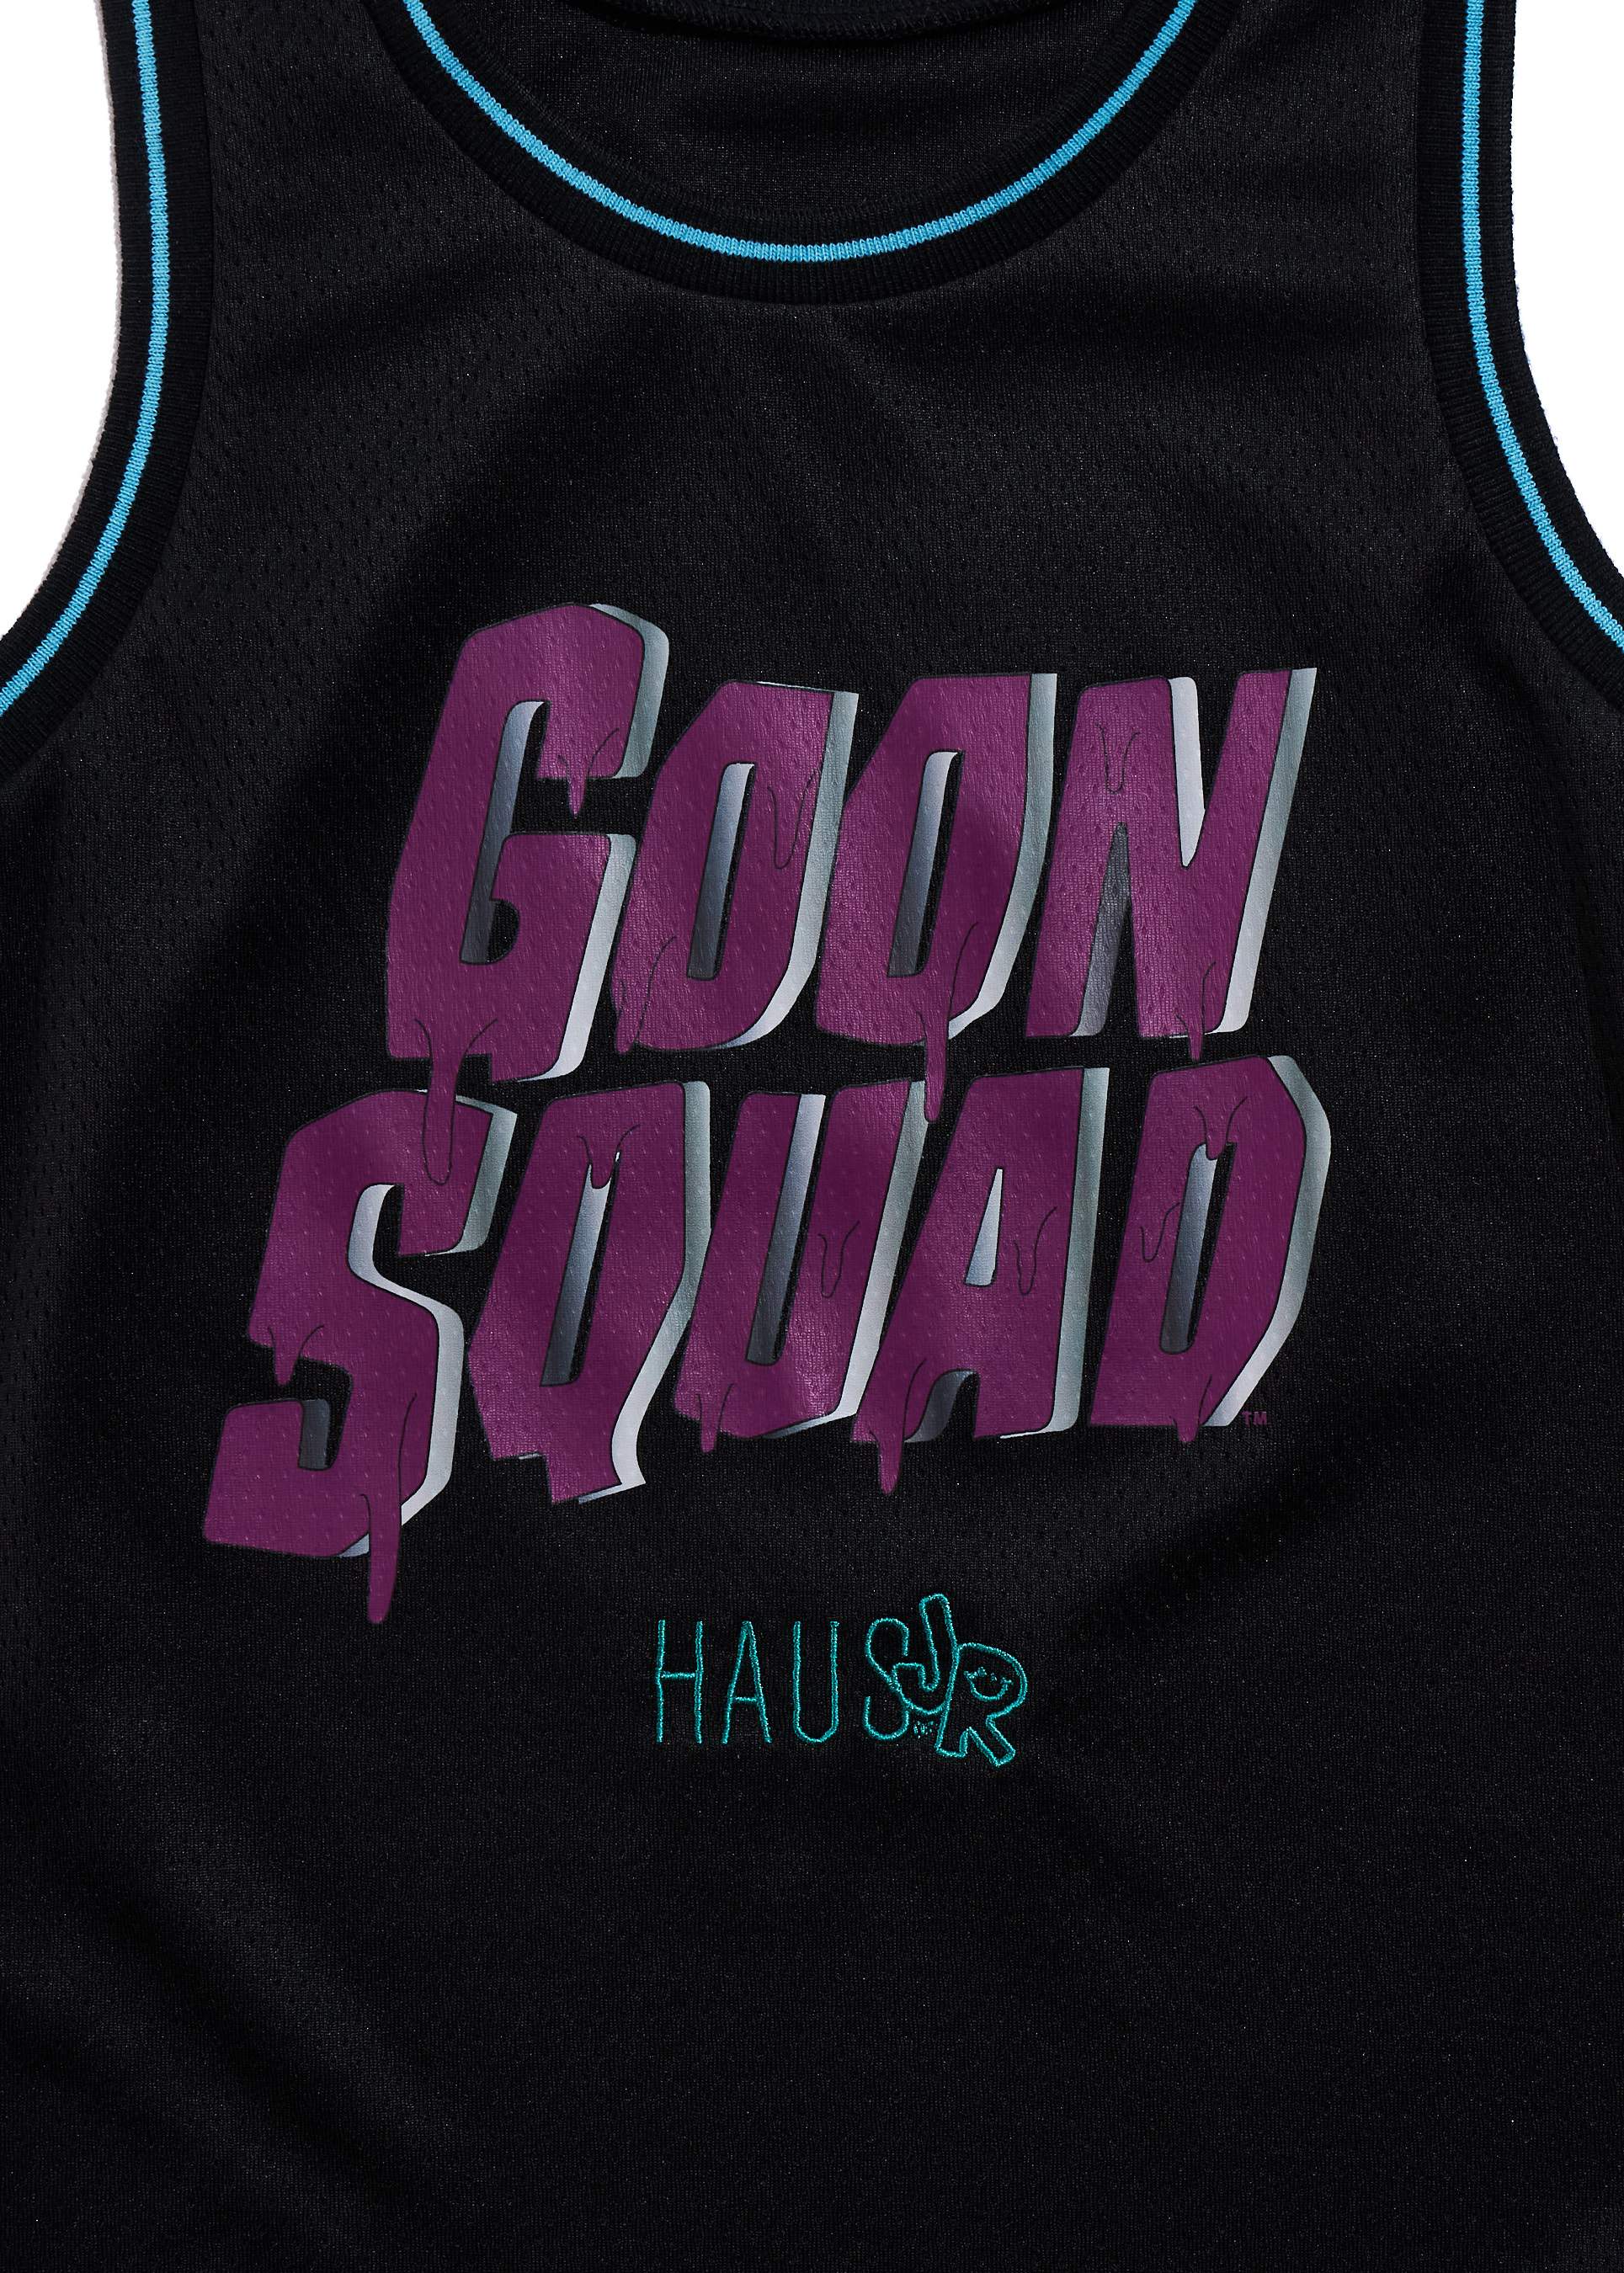 goon squad basketball jersey